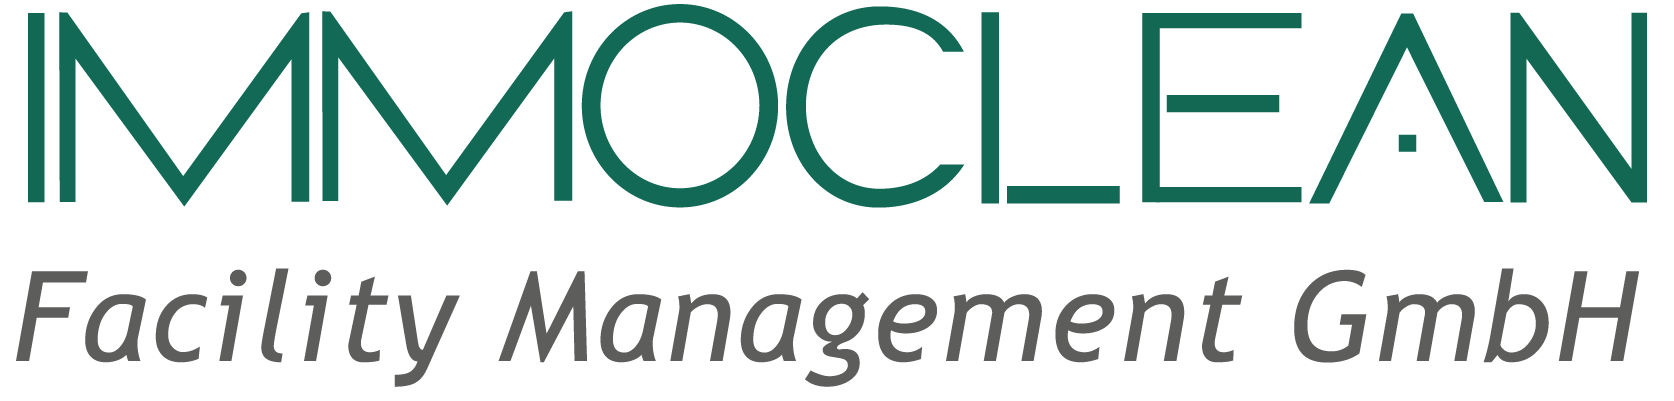 Immoclean Logo